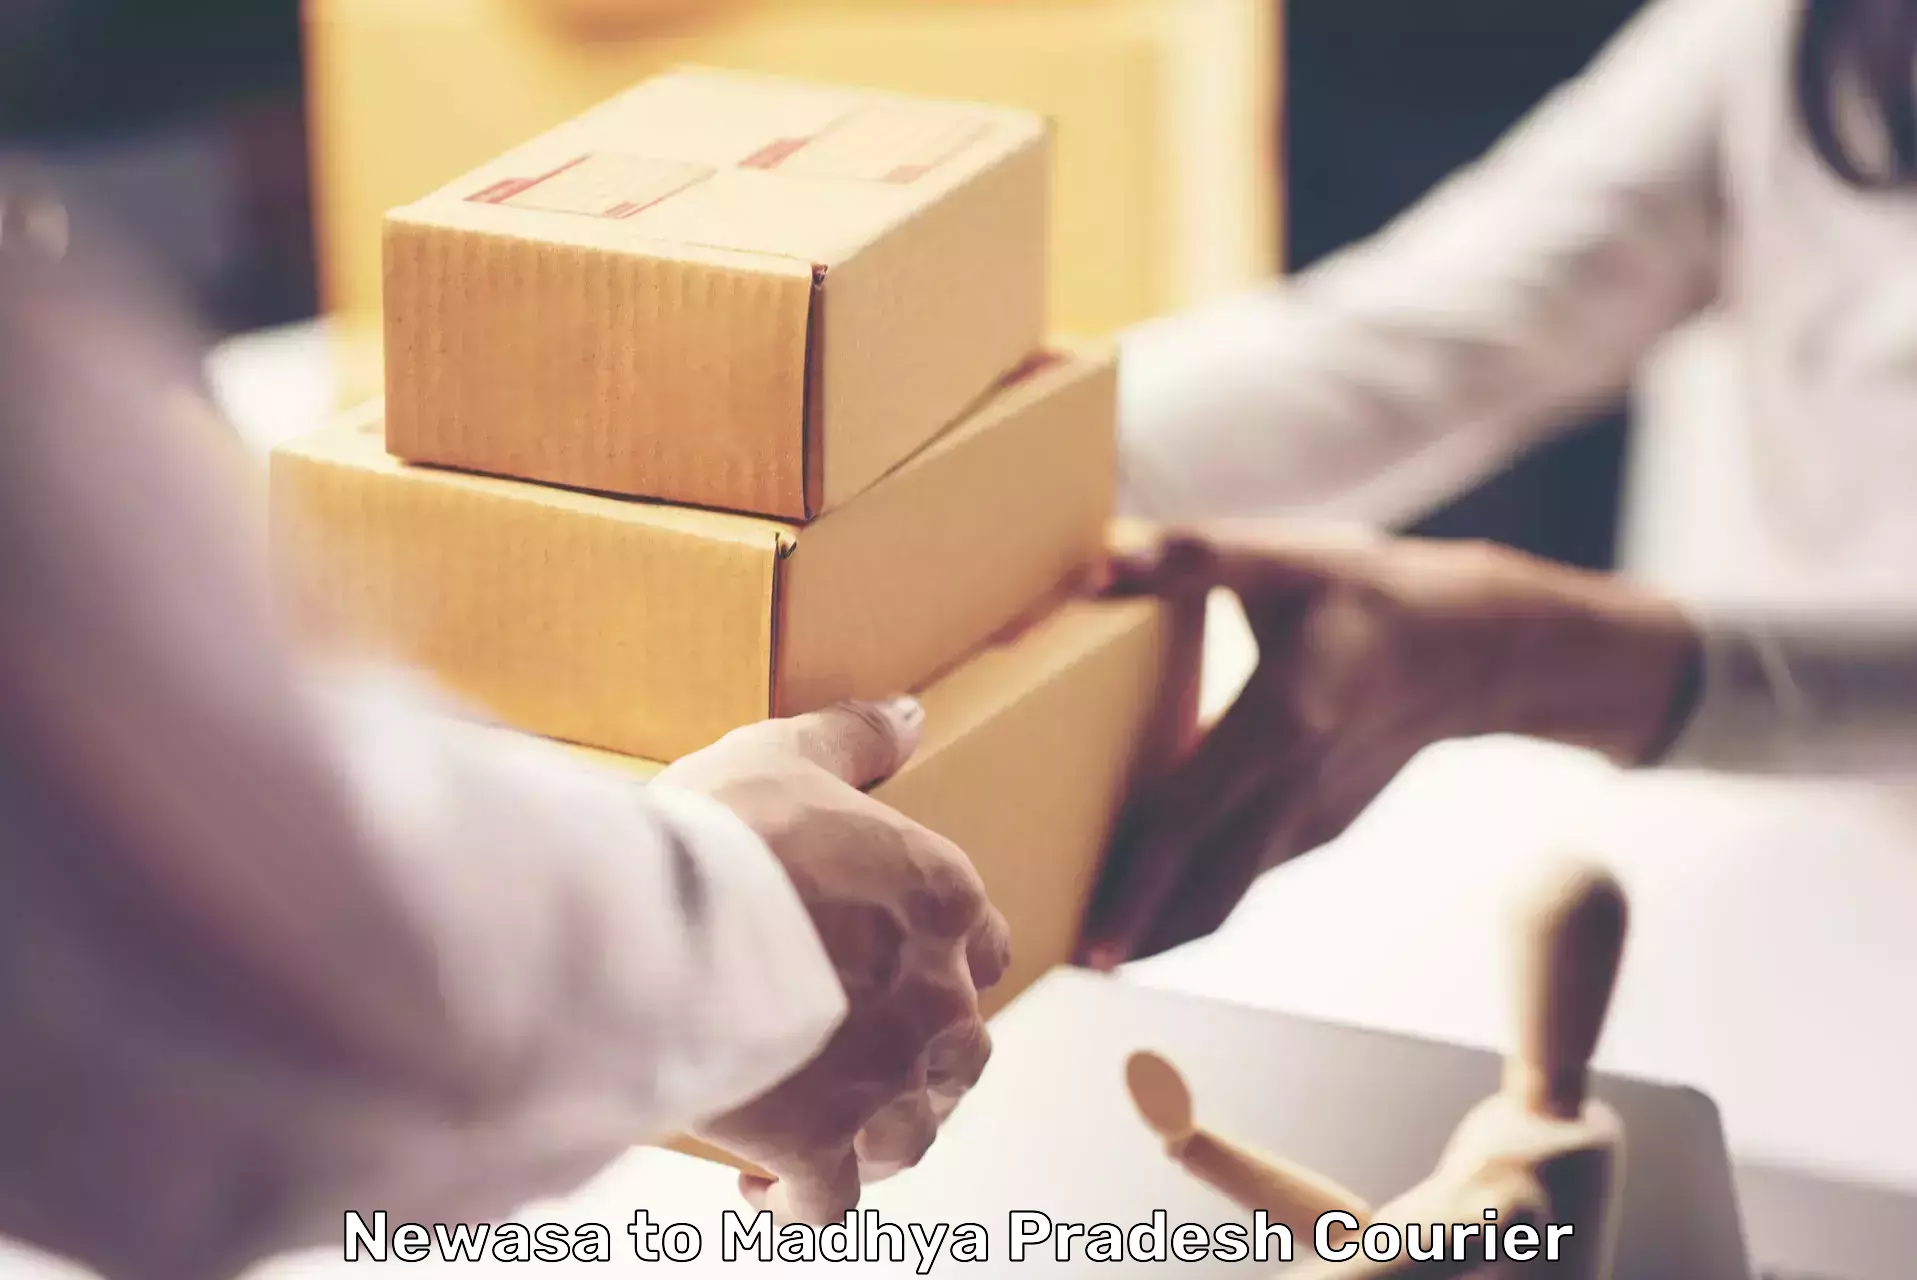 Cargo delivery service Newasa to Madhya Pradesh